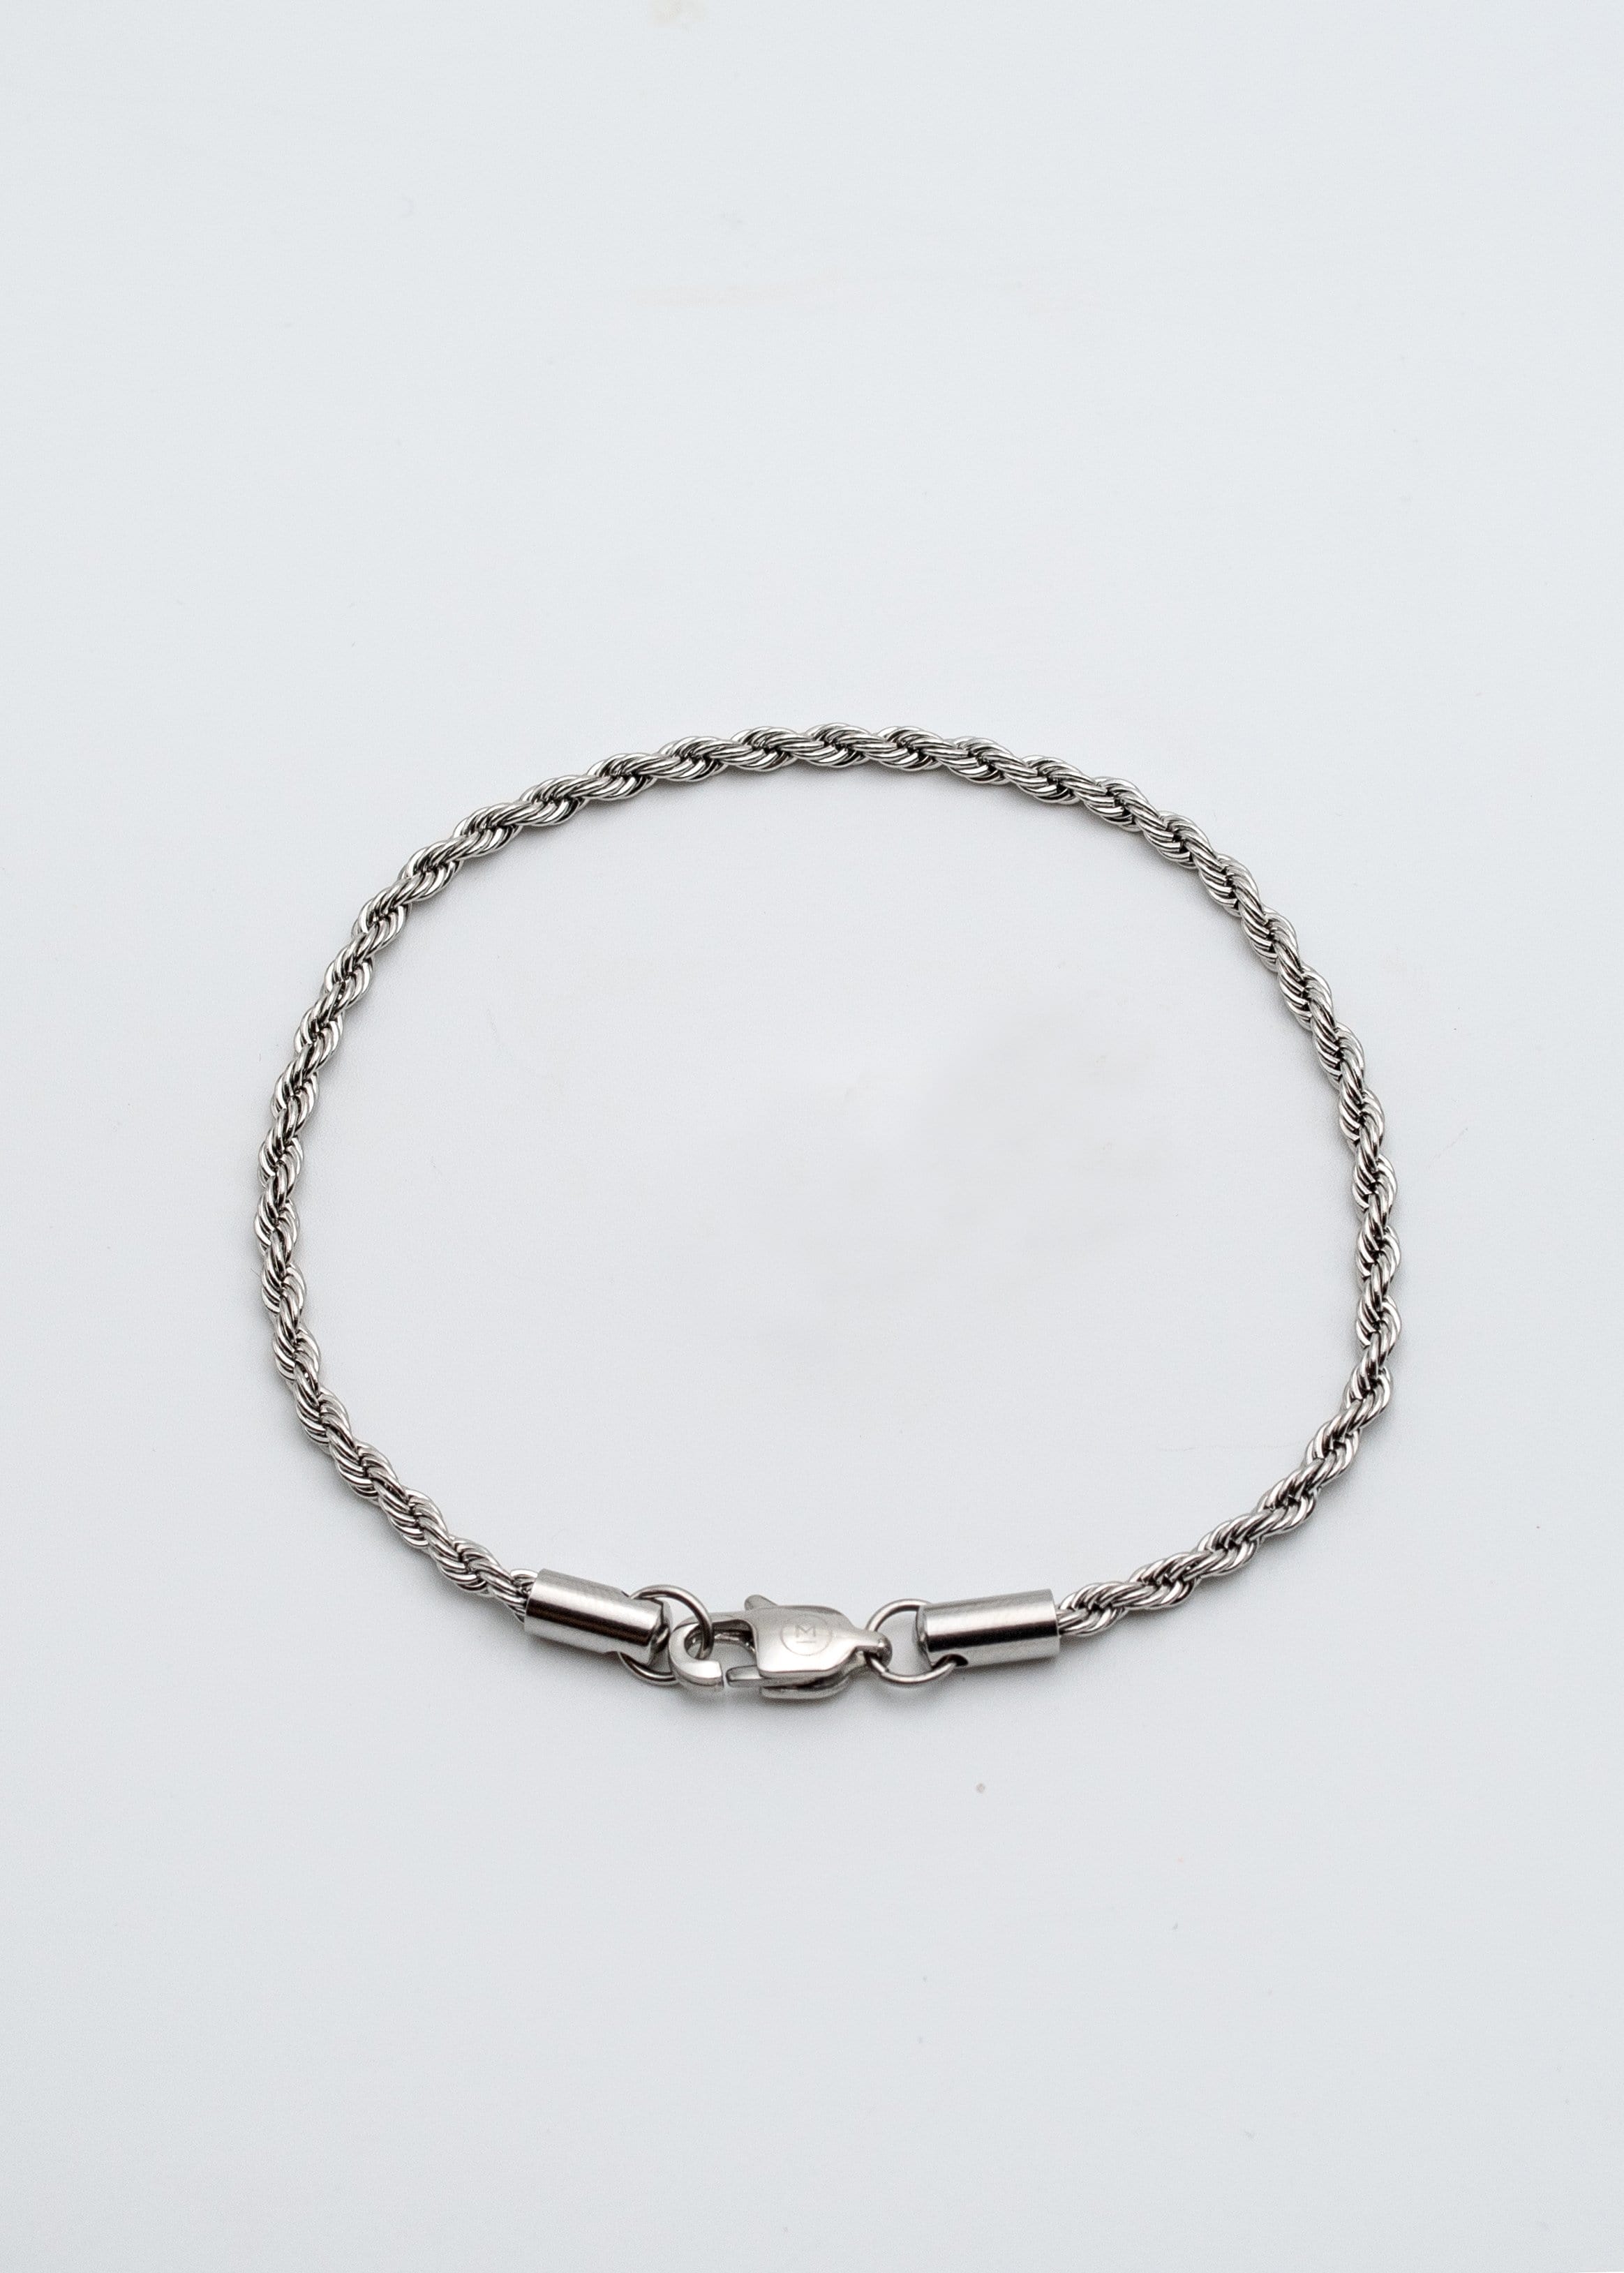 Mulat 3MM Rope Bracelet - Silver 